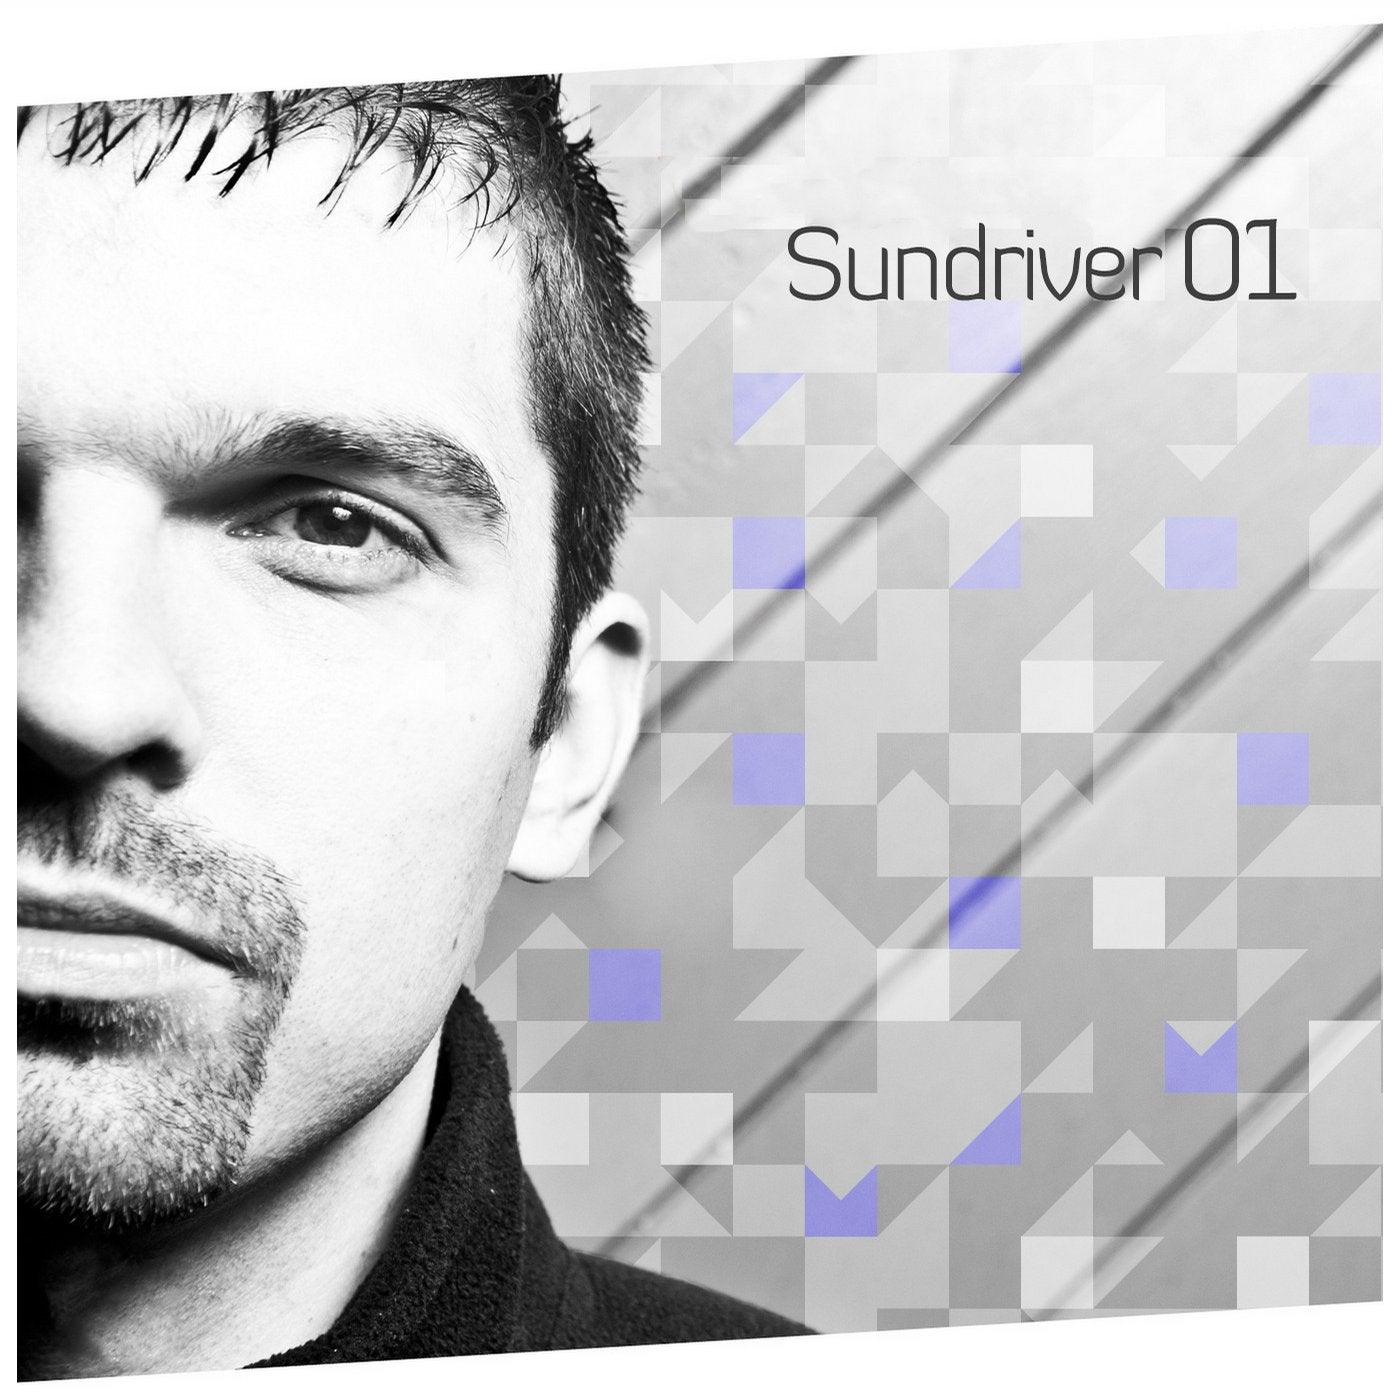 Sundriver. Schodt - you and me (Sundriver Remix). Sundriver CA album. M.L.Denis Laurent. Clubbed away